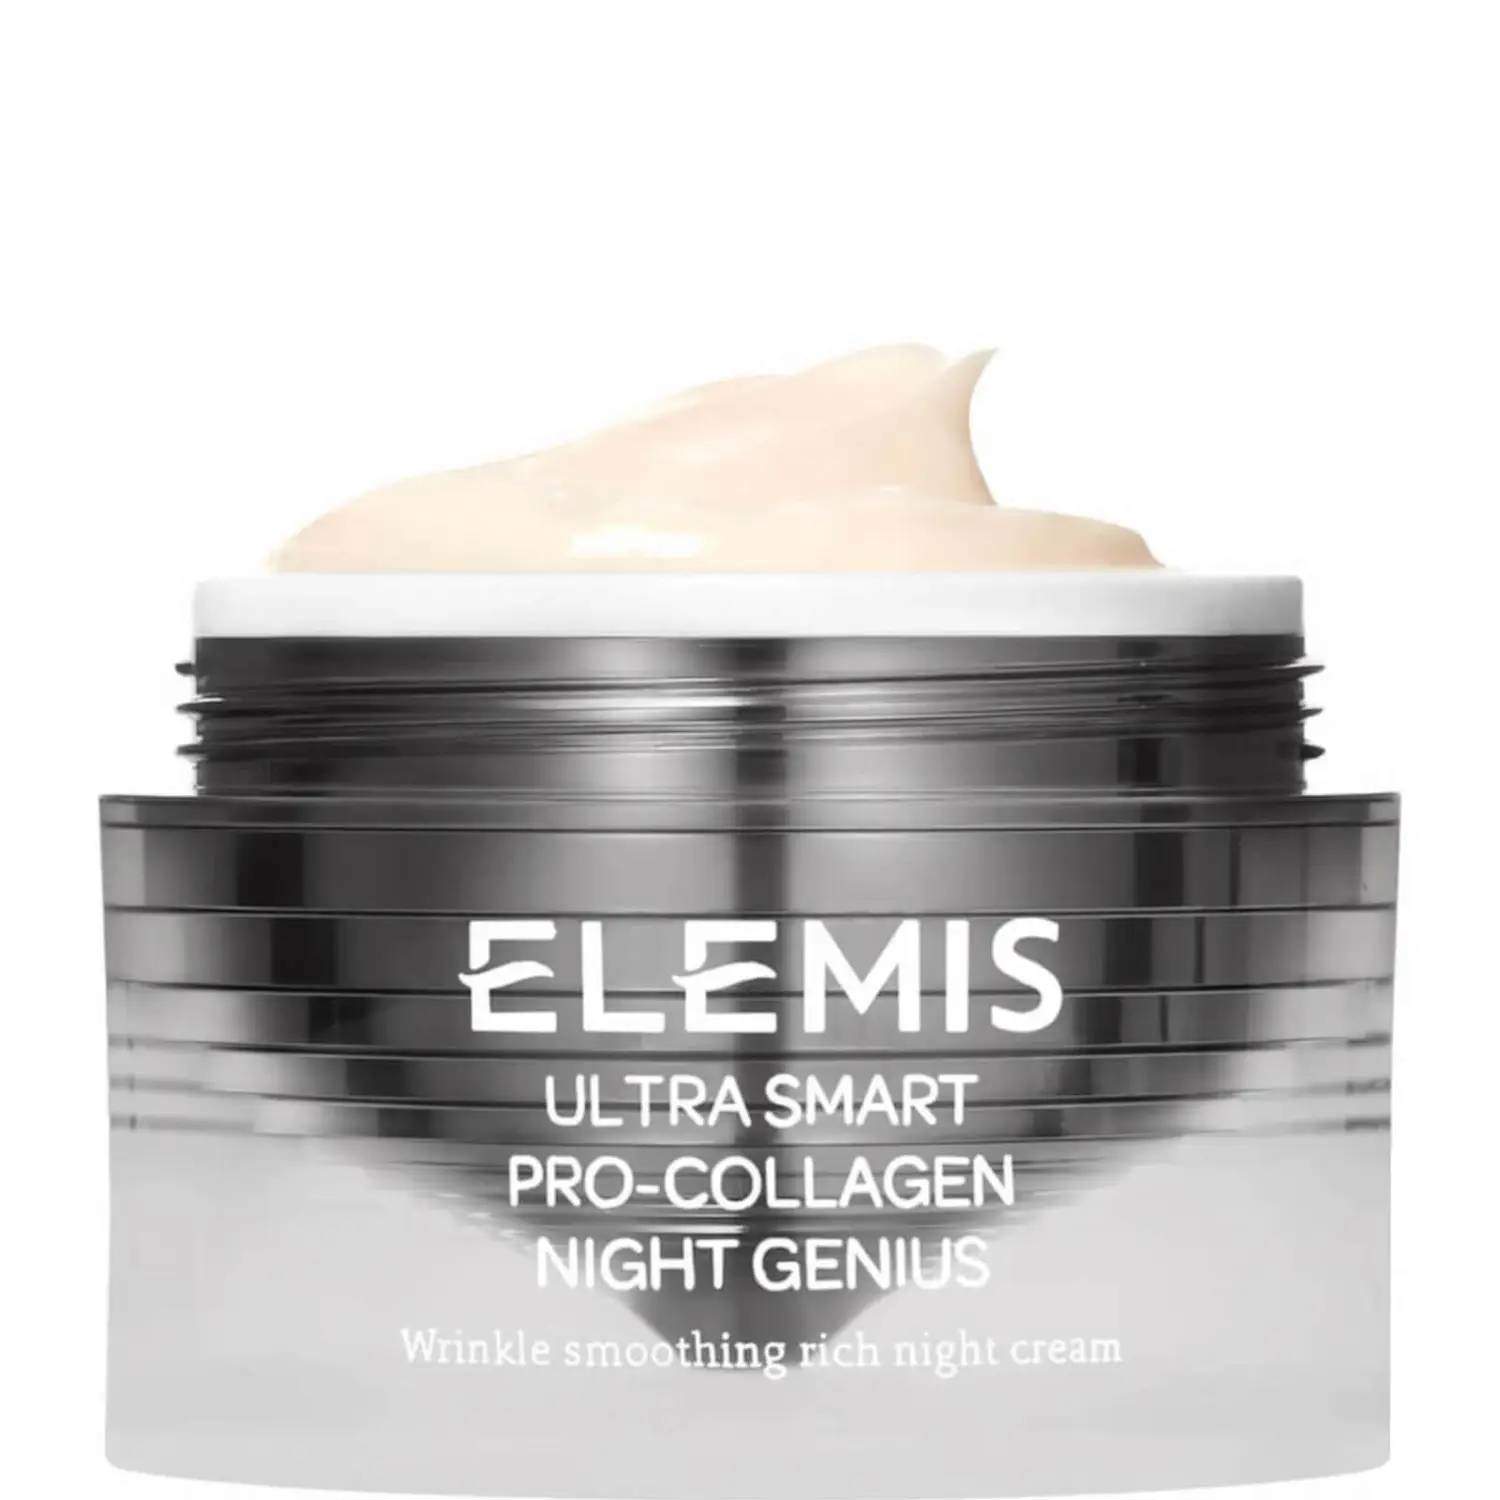 Crema ultra smart pro collagen elemis